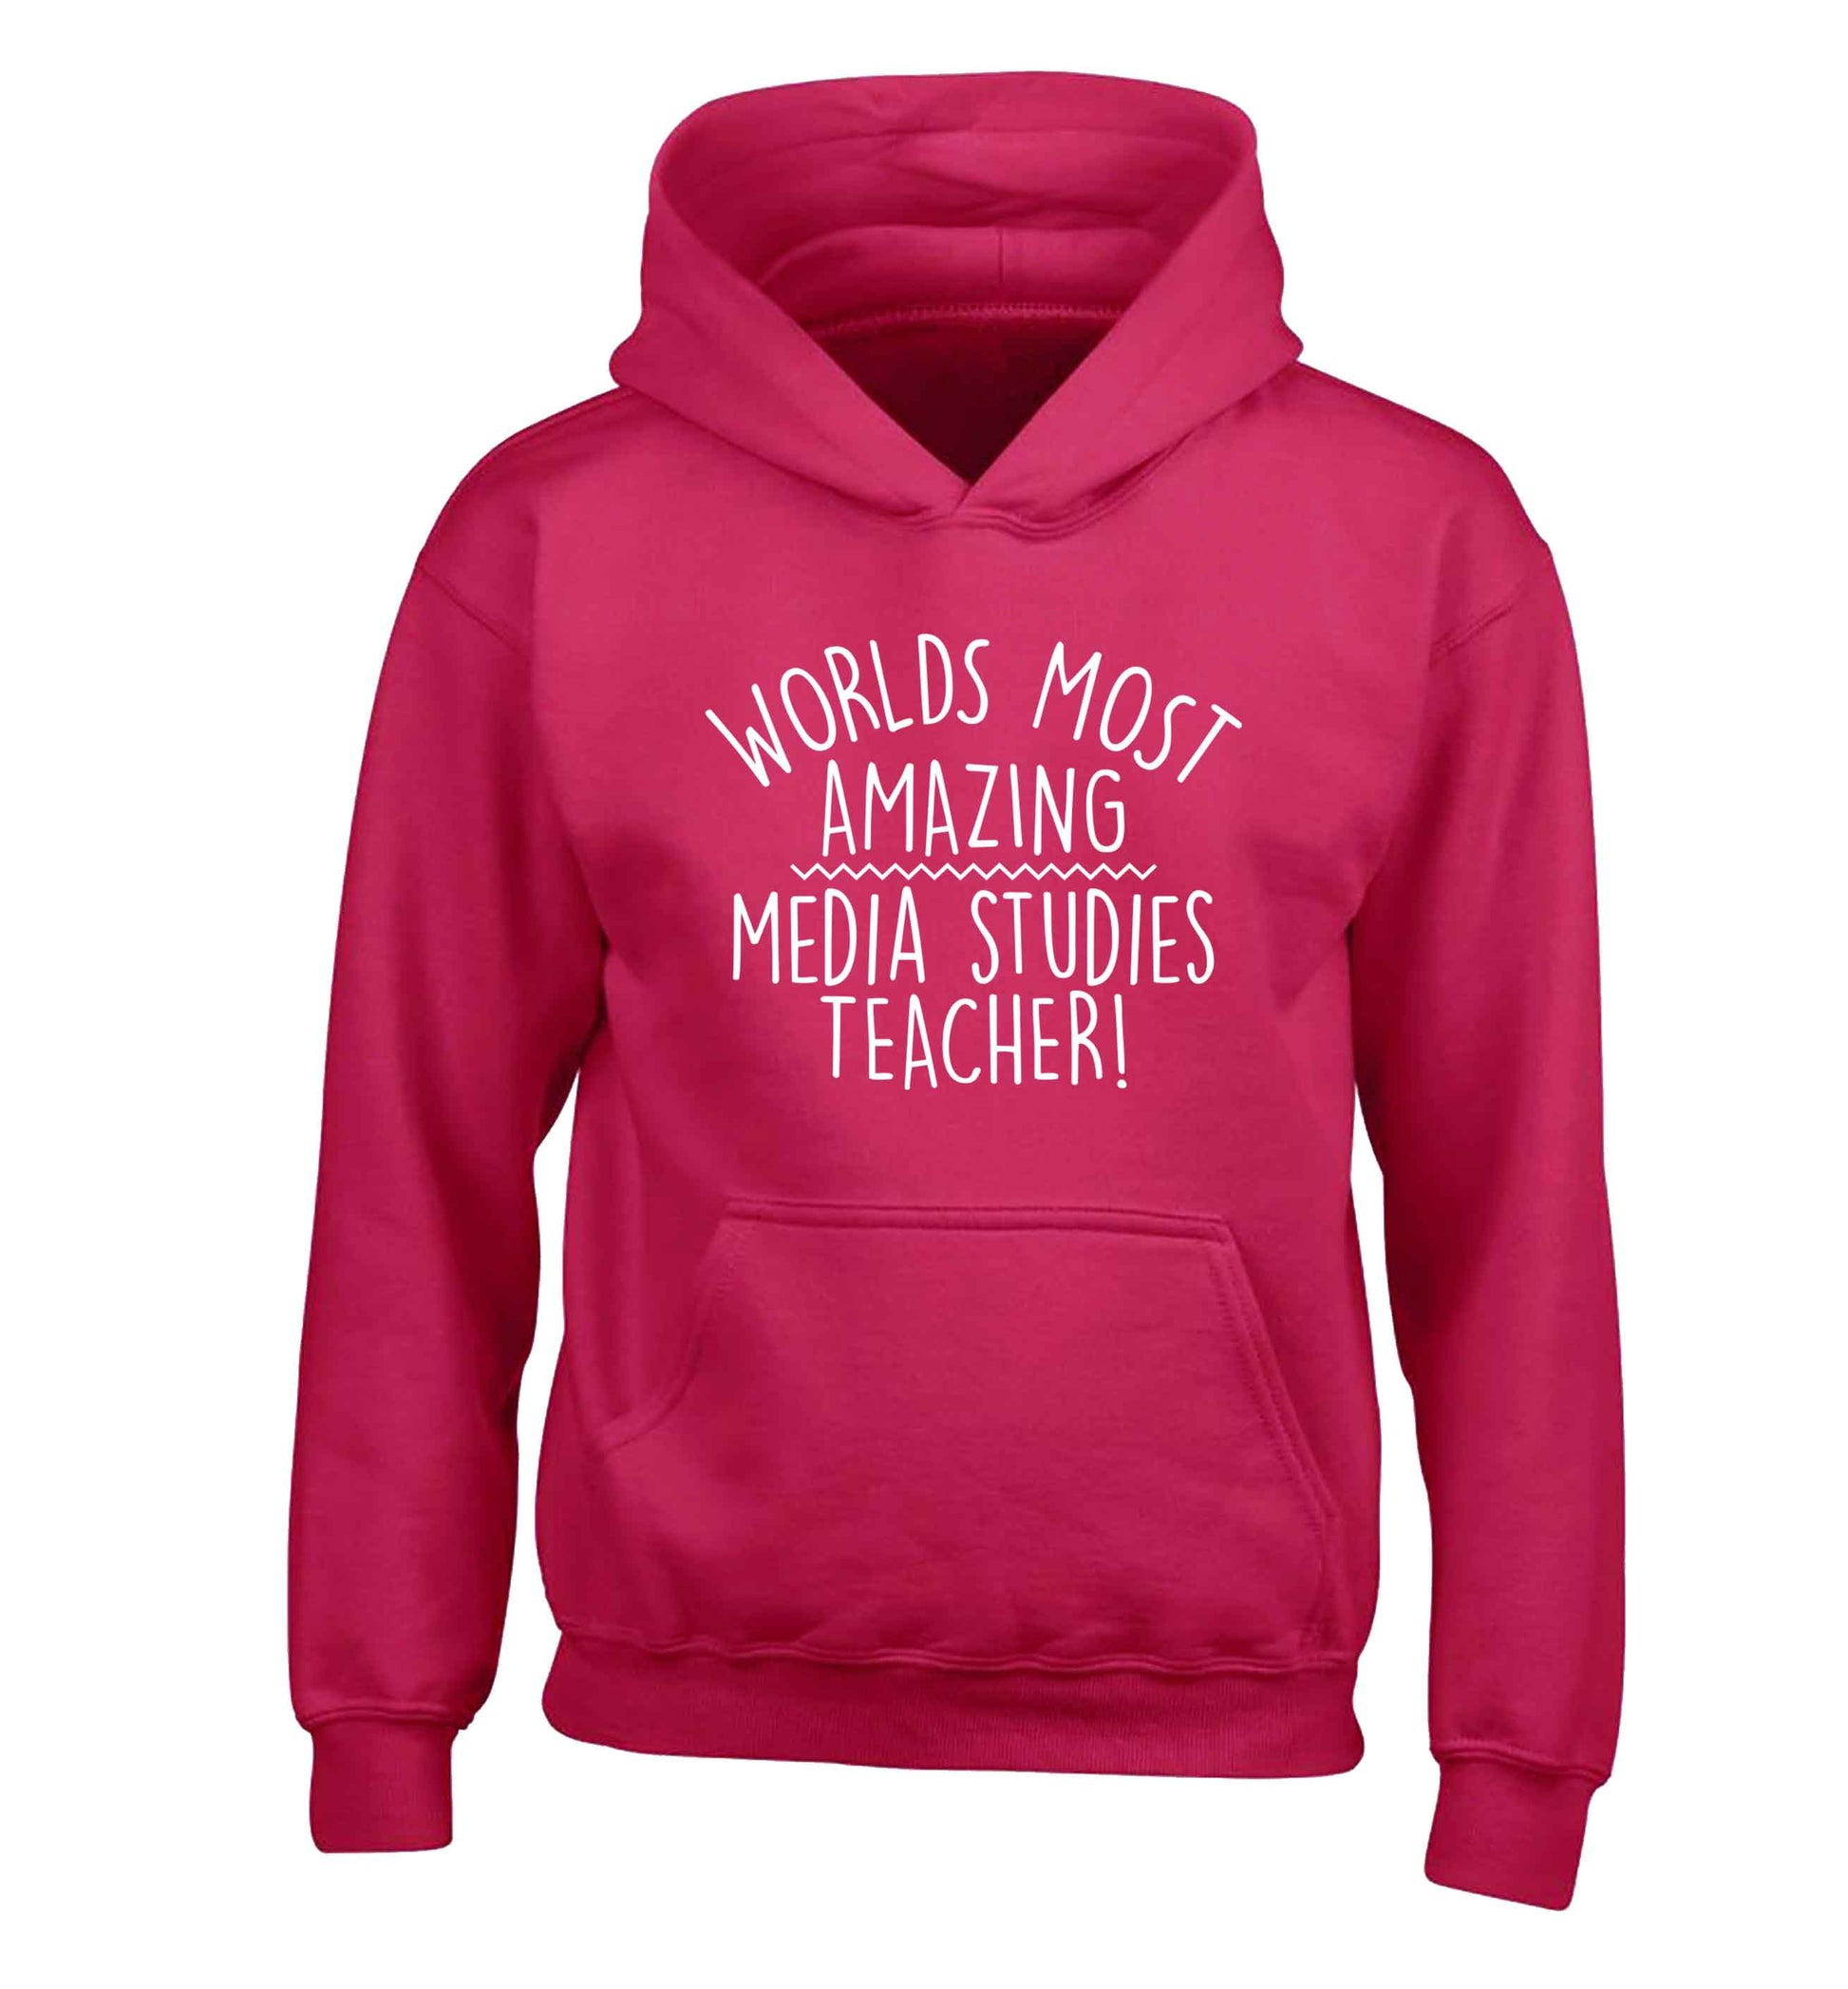 Worlds most amazing media studies teacher children's pink hoodie 12-13 Years